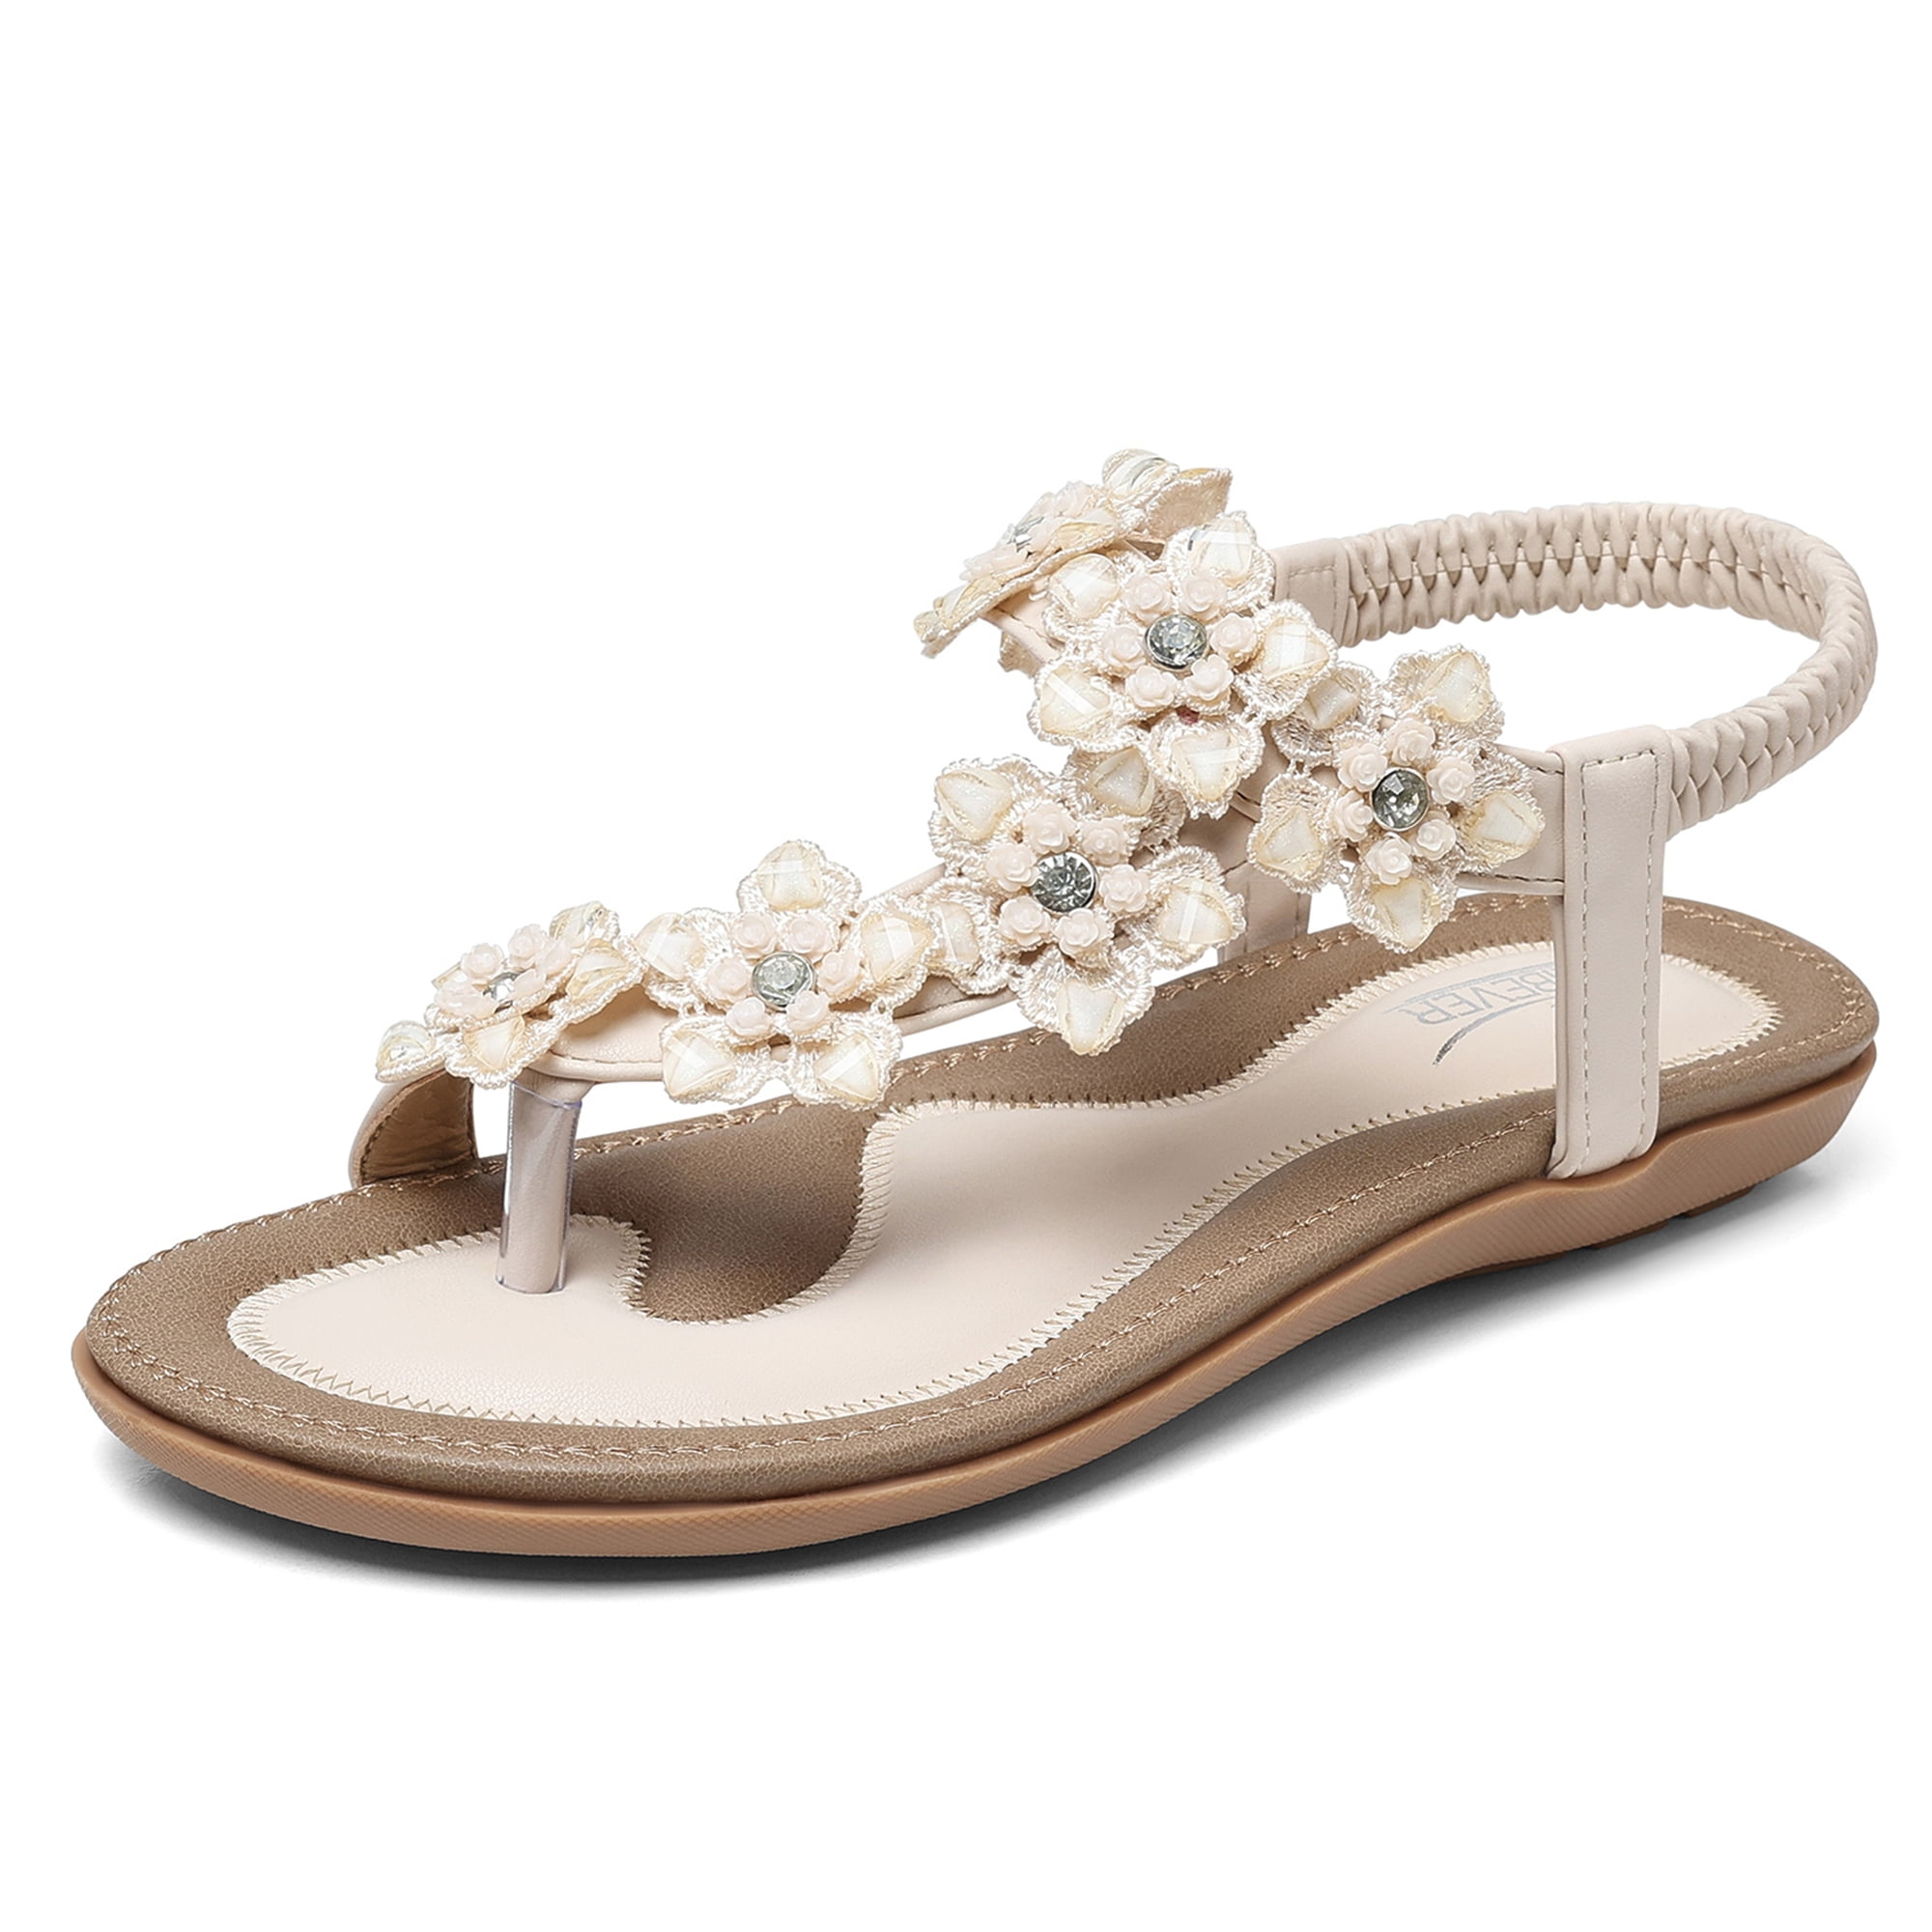 SHIBEVER Flats Sandals for Women Summer Bohemian Elastic Ankle Strap ...